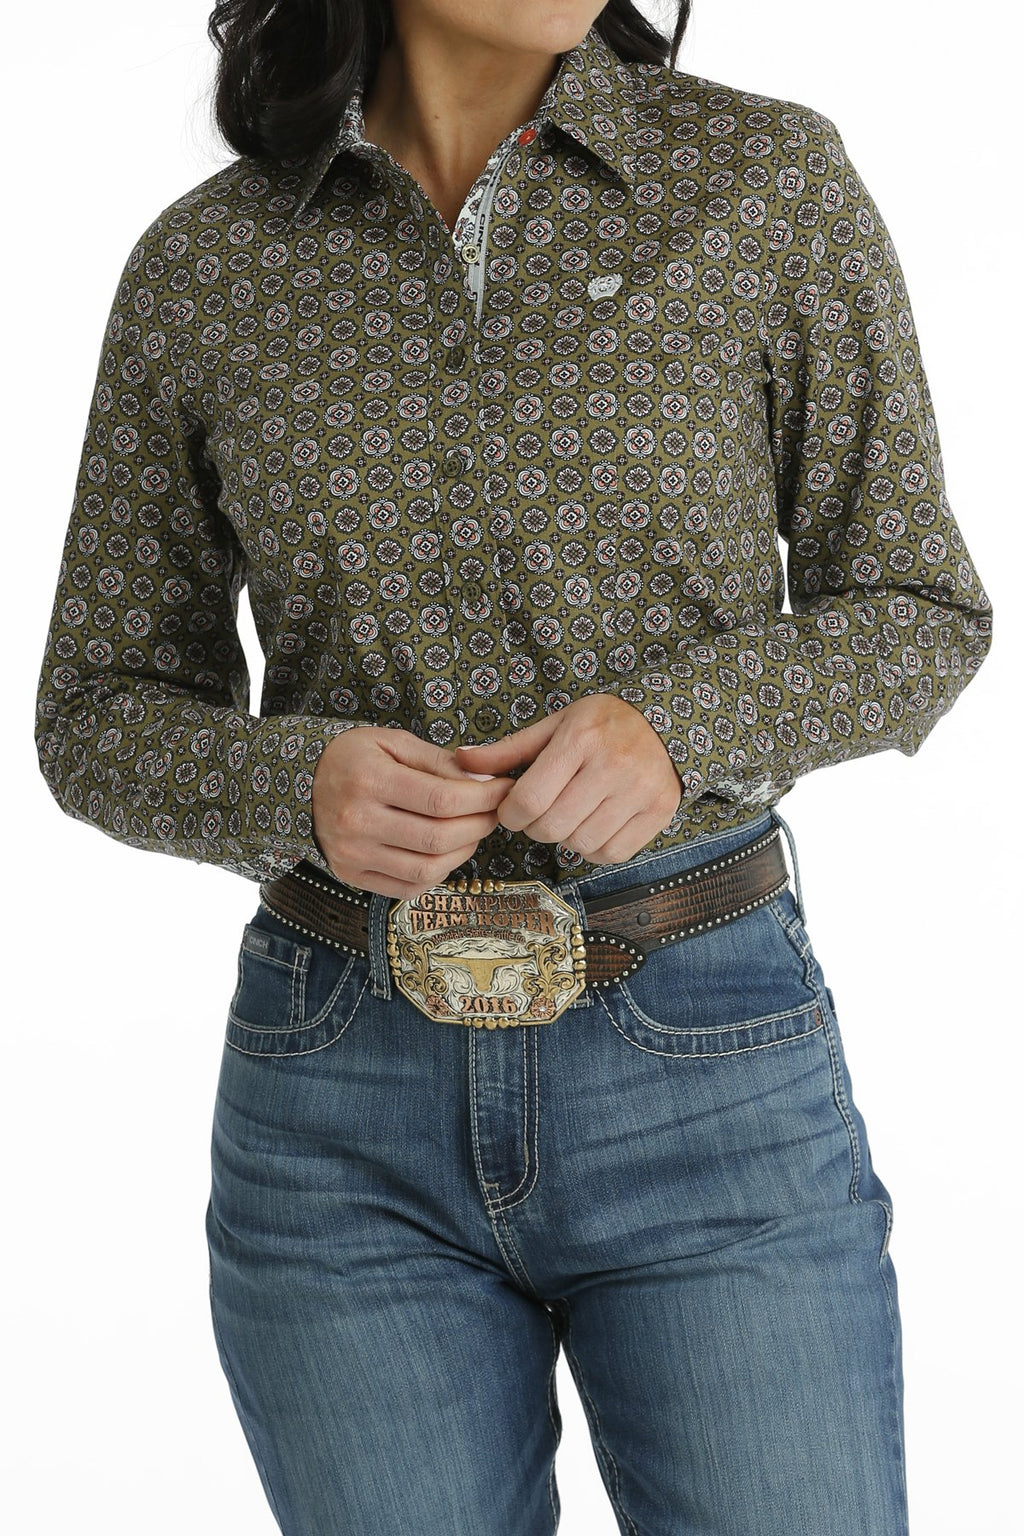 CINCH Women's Olive Button-Down Western Shirt